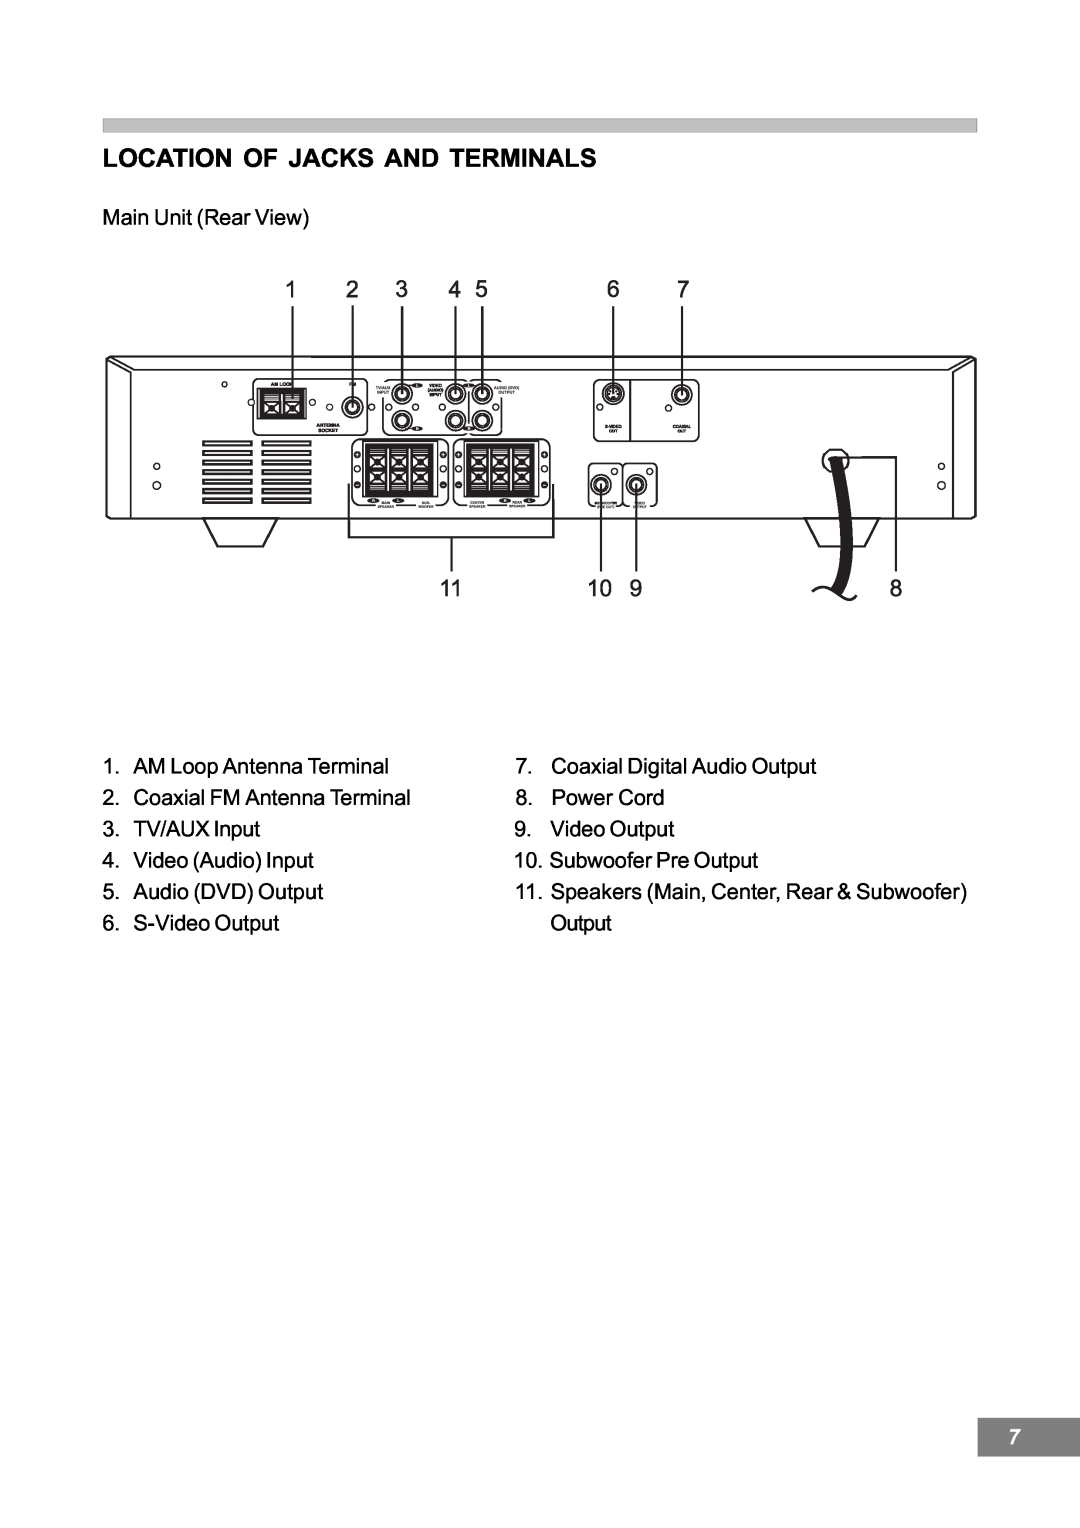 Emerson AV101 manual Location Of Jacks And Terminals 